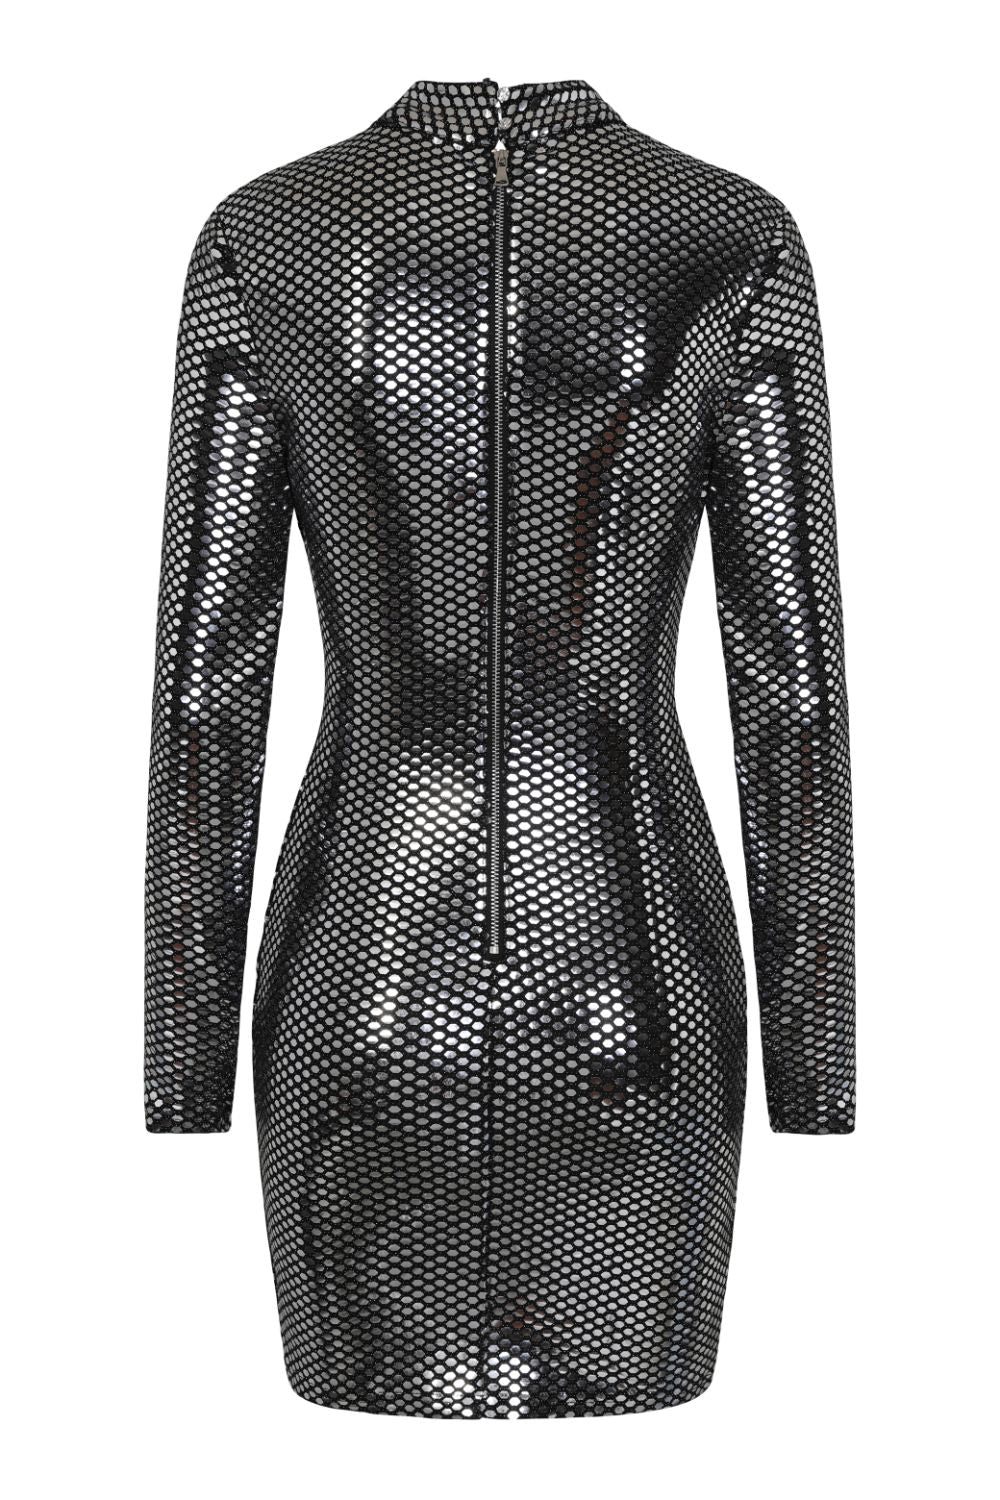 Hypnotised Silver Metallic Mirrored Sequin Bodycon Dress